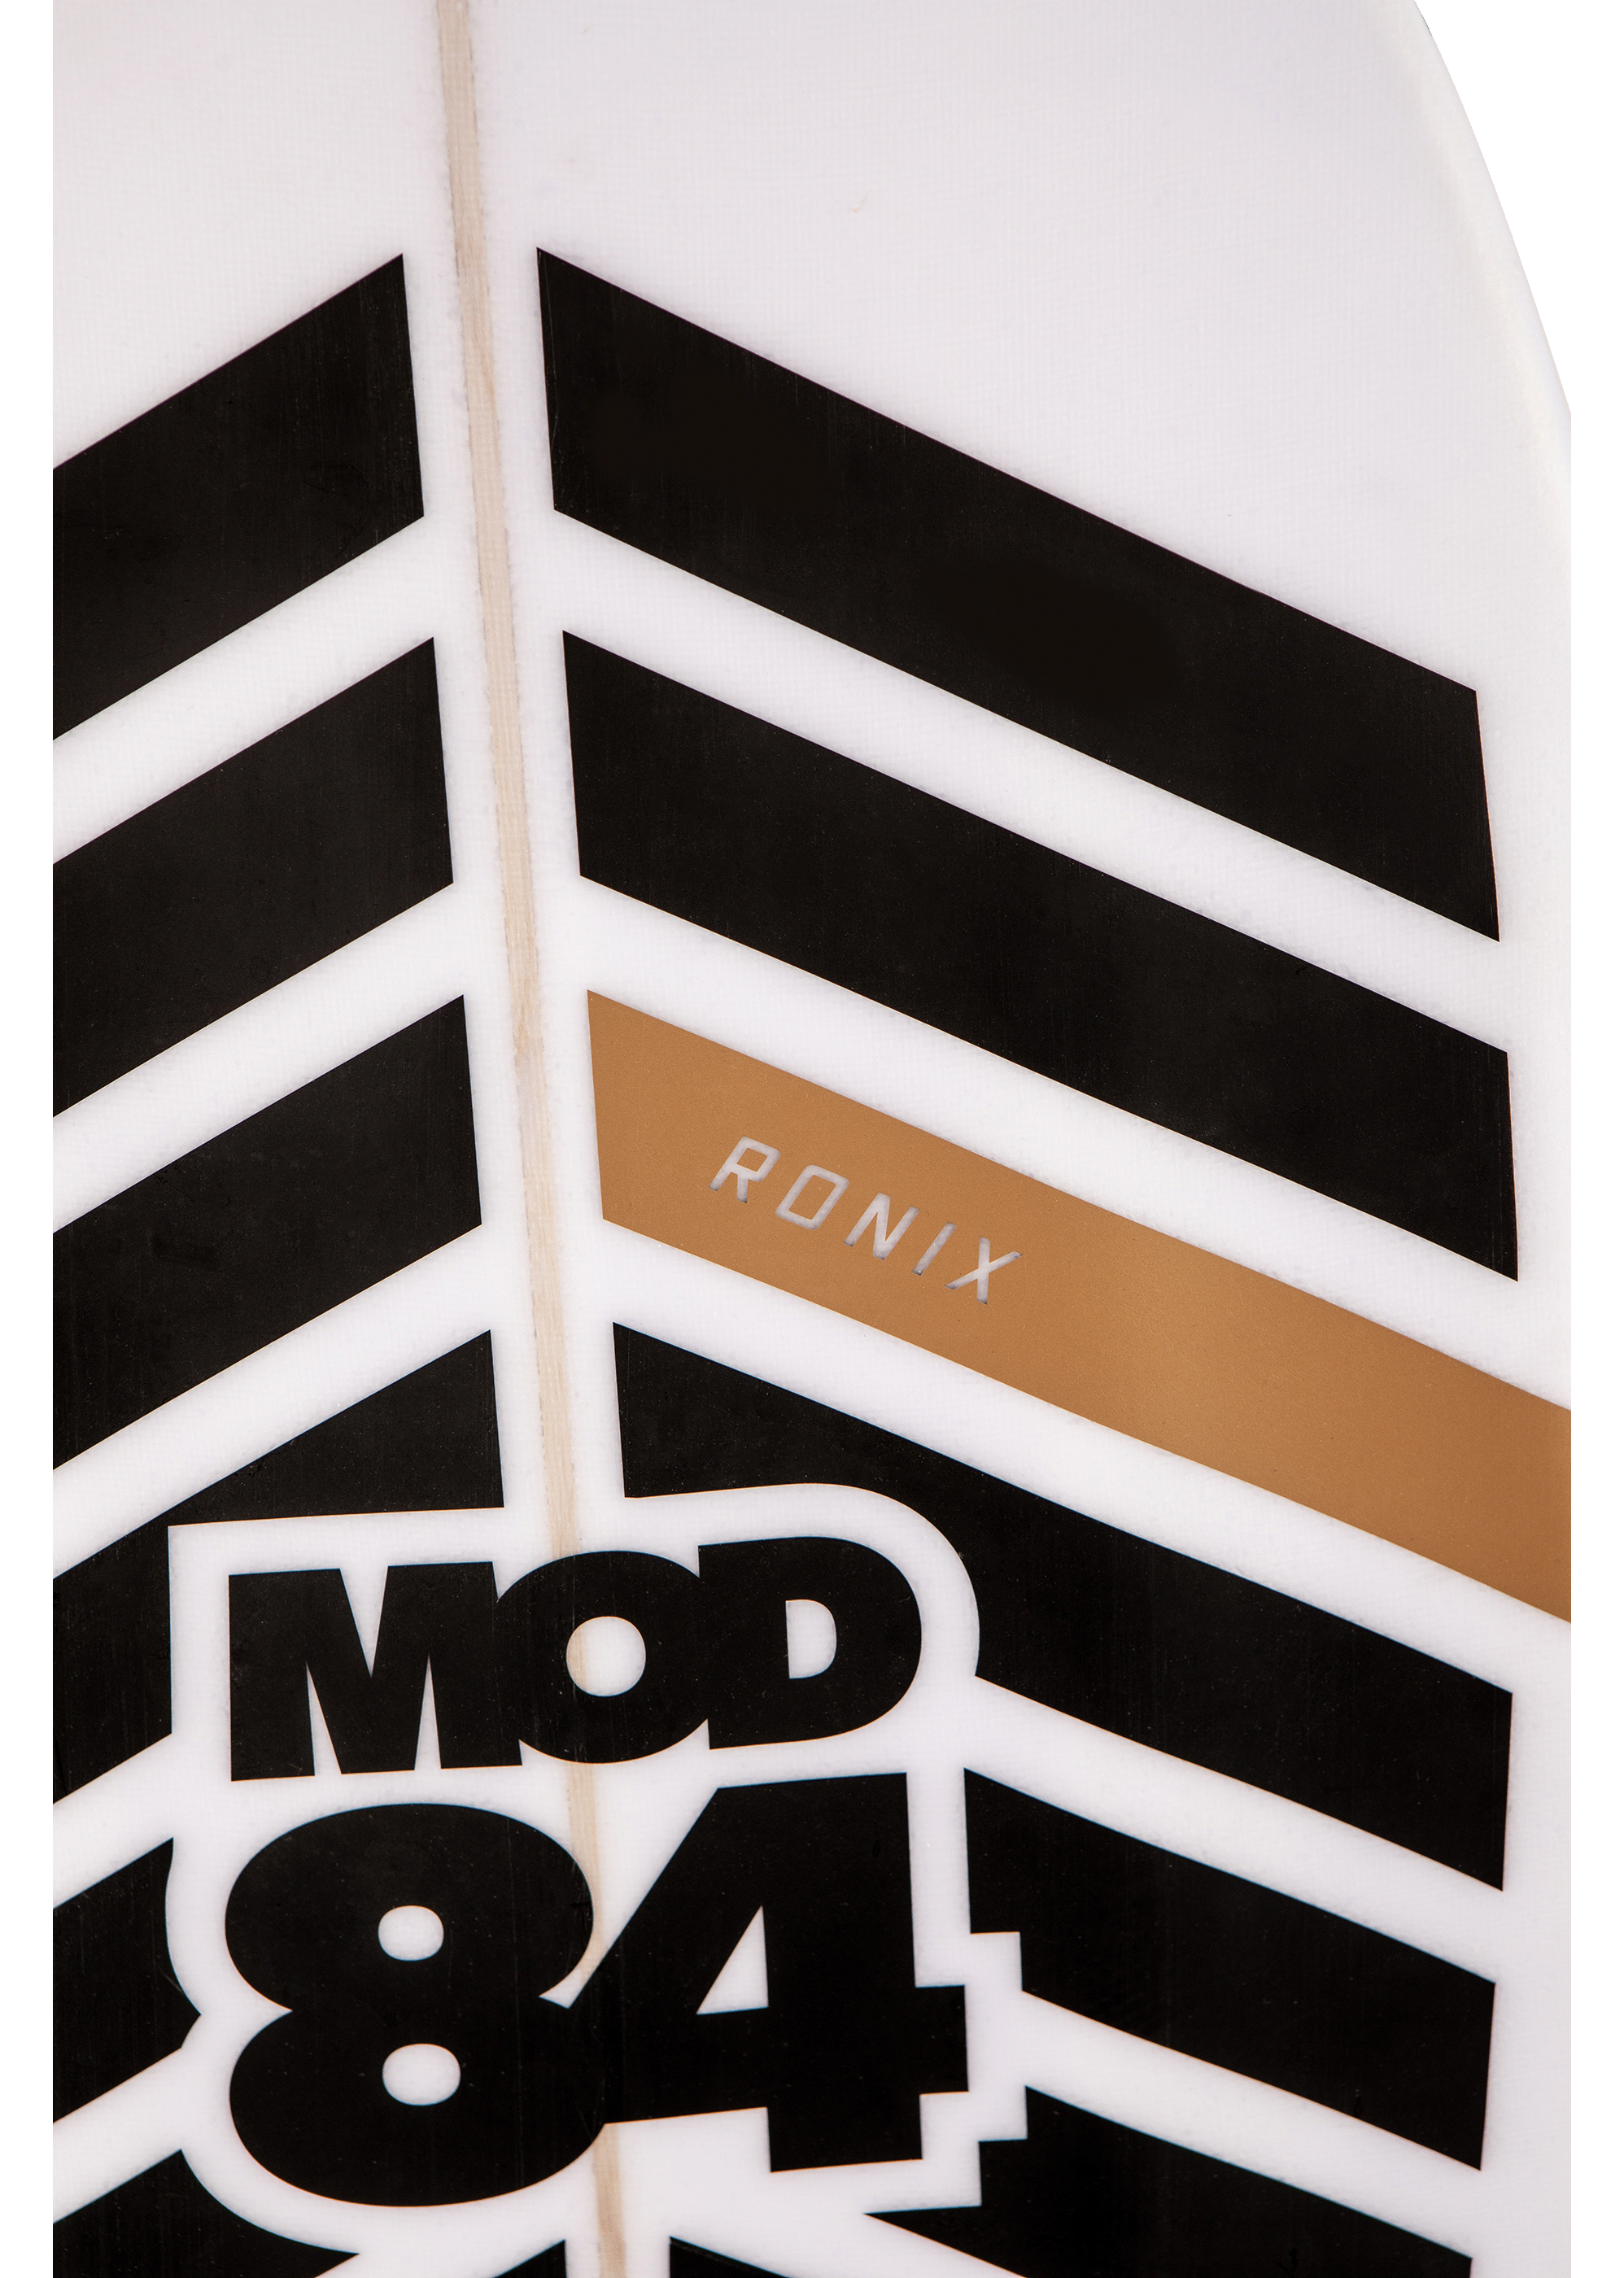 MOD 84 - INSET 8